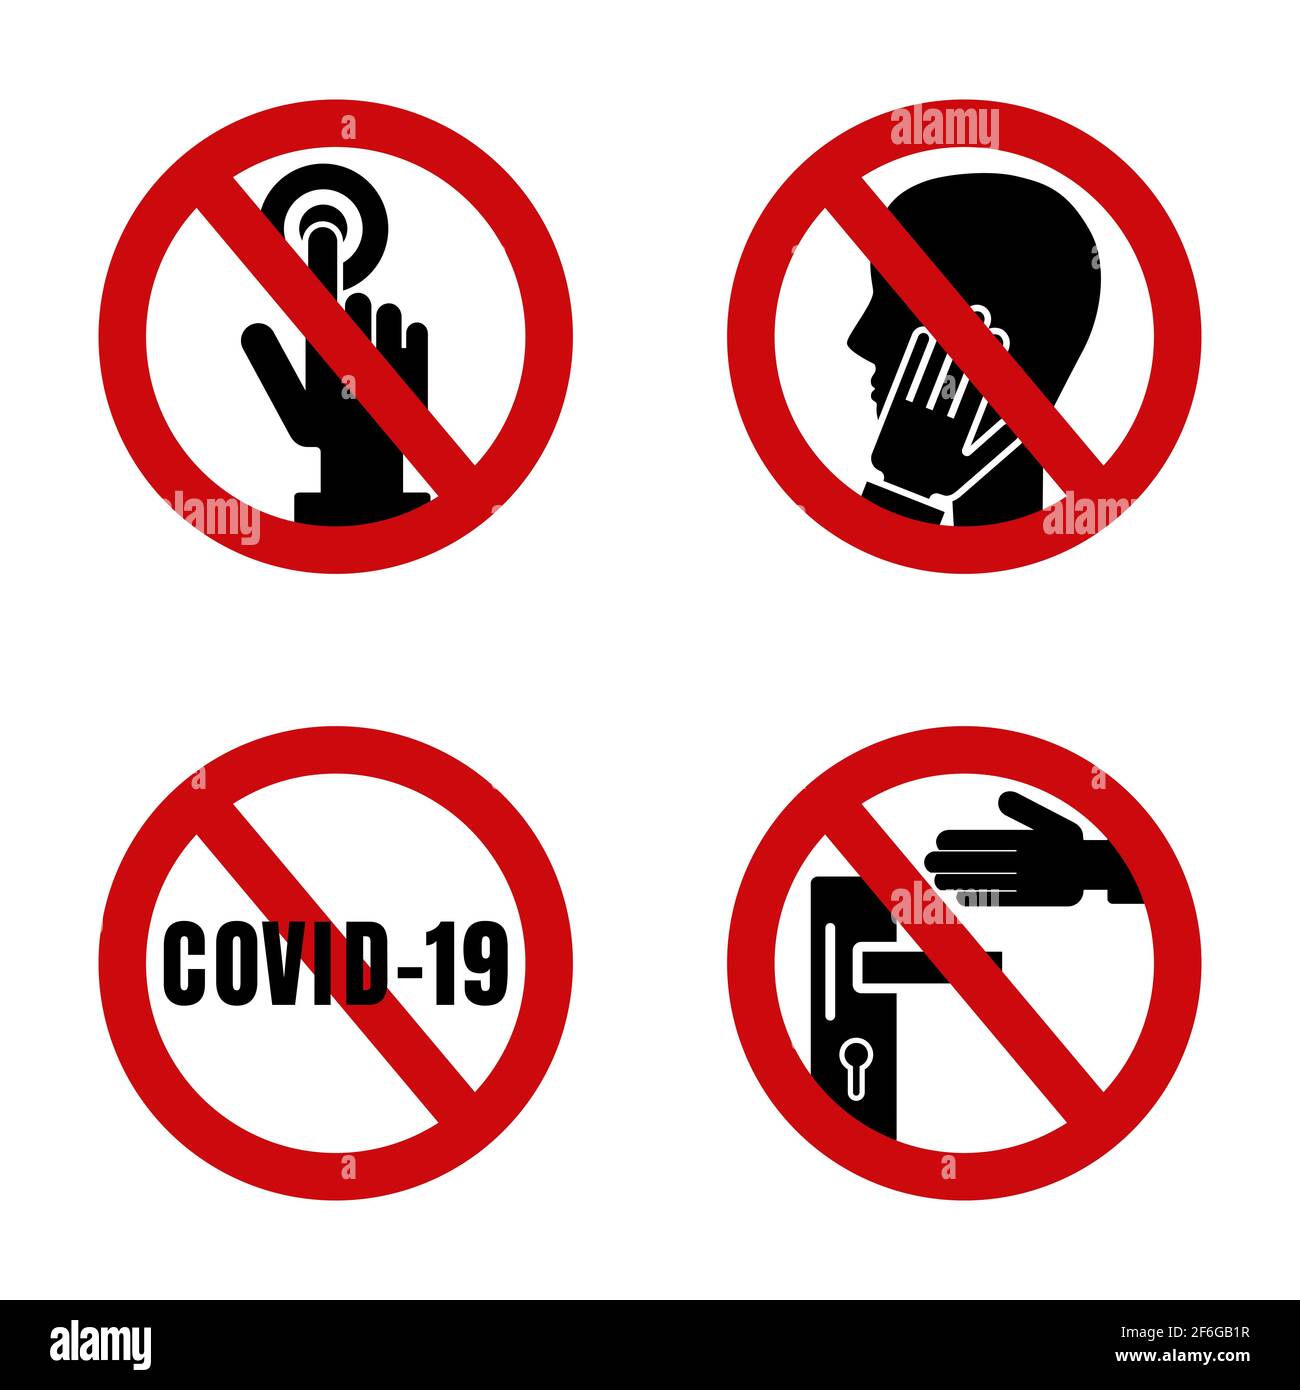 Coronavirus, 2019-nCoV. Stop prohibition red sign. Forbidden icon with  no coronavirus. Don't touch face, doorhandle, door bell. Dangerous vector symb Stock Vector